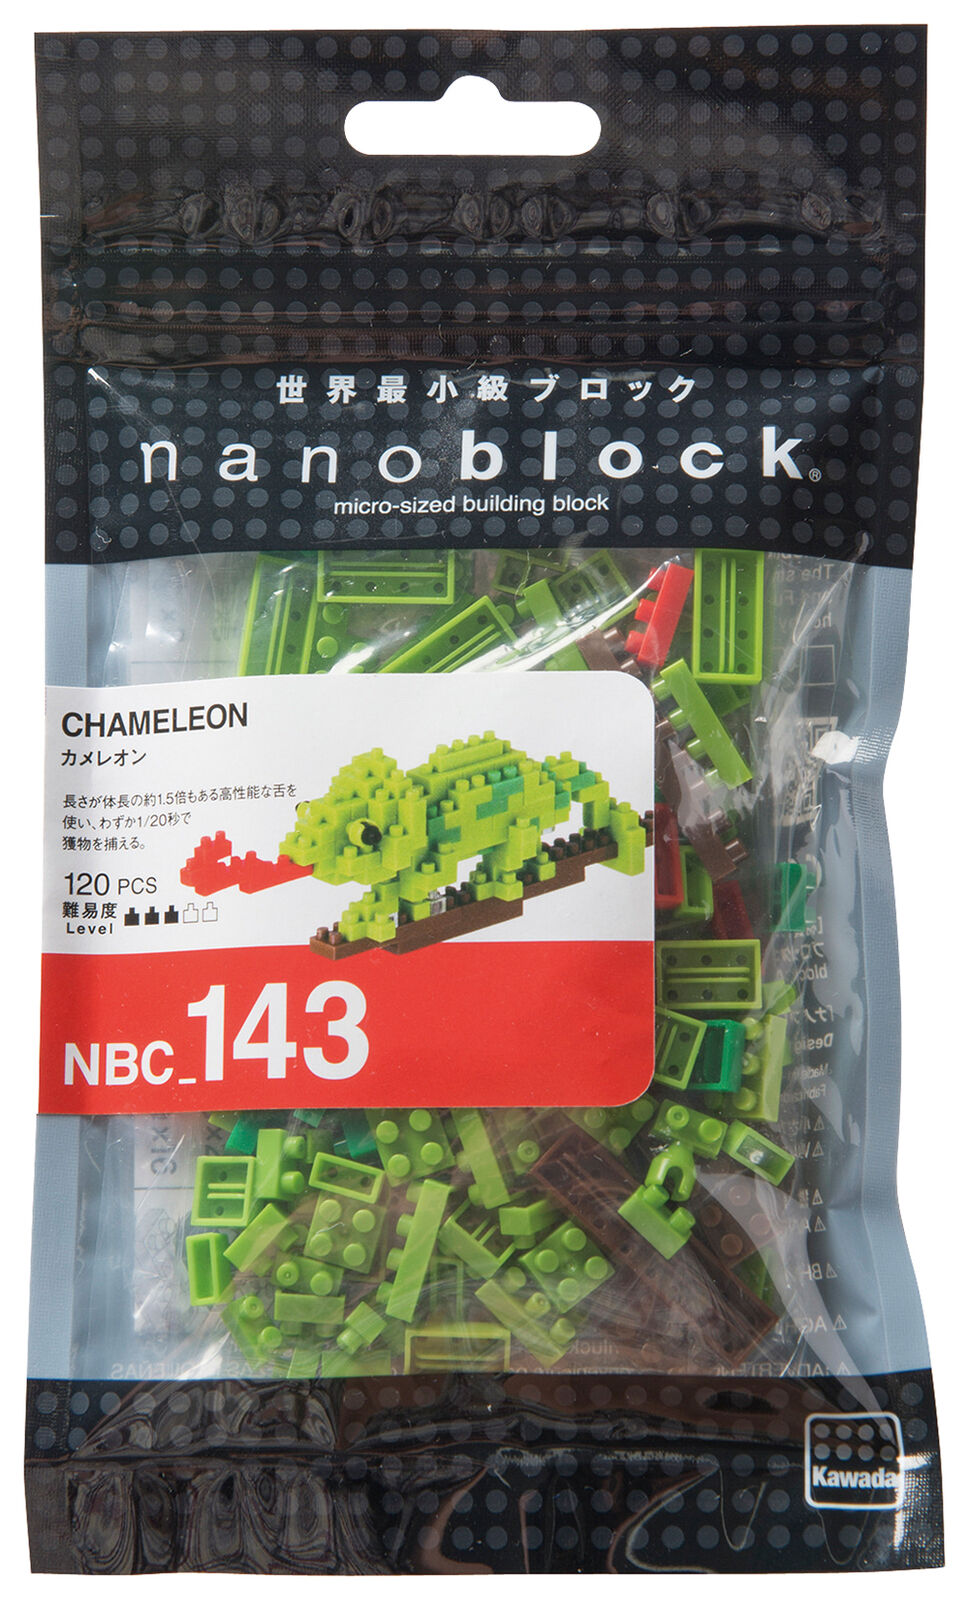 NBC143 nanoblock Chameleon [Mini Collection Series] Micro-Sized 120 pcs Age 12Y+